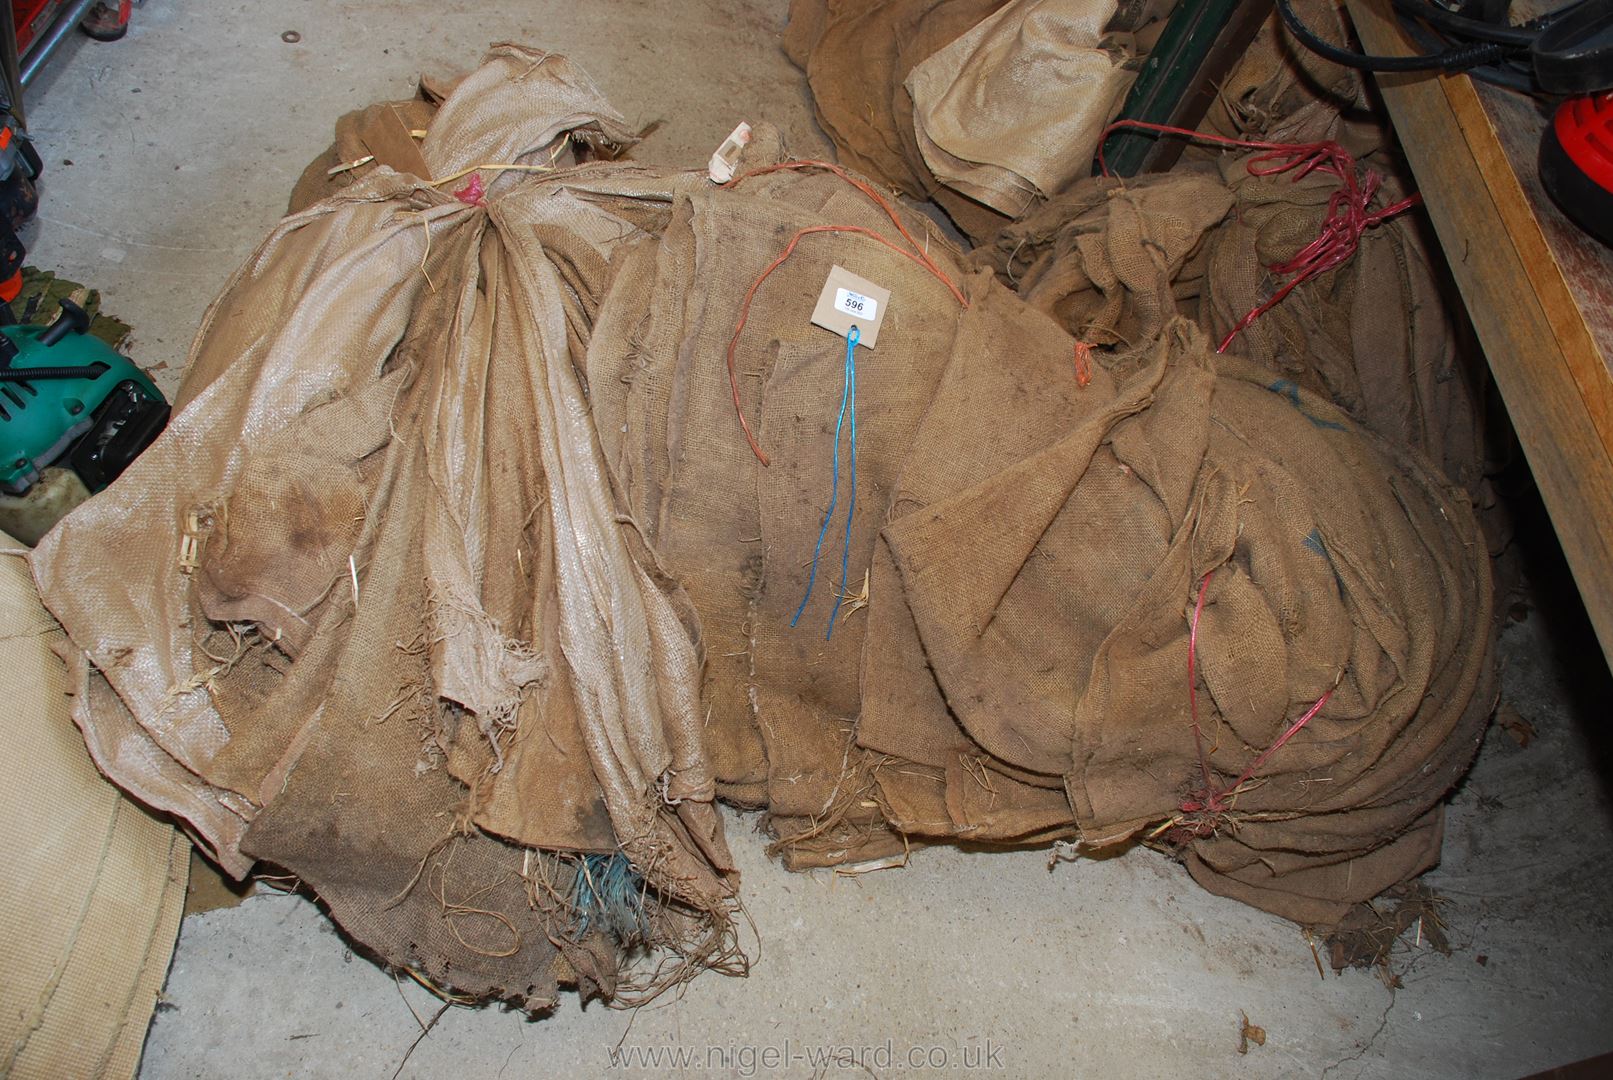 Three bundles of hessian sacks.